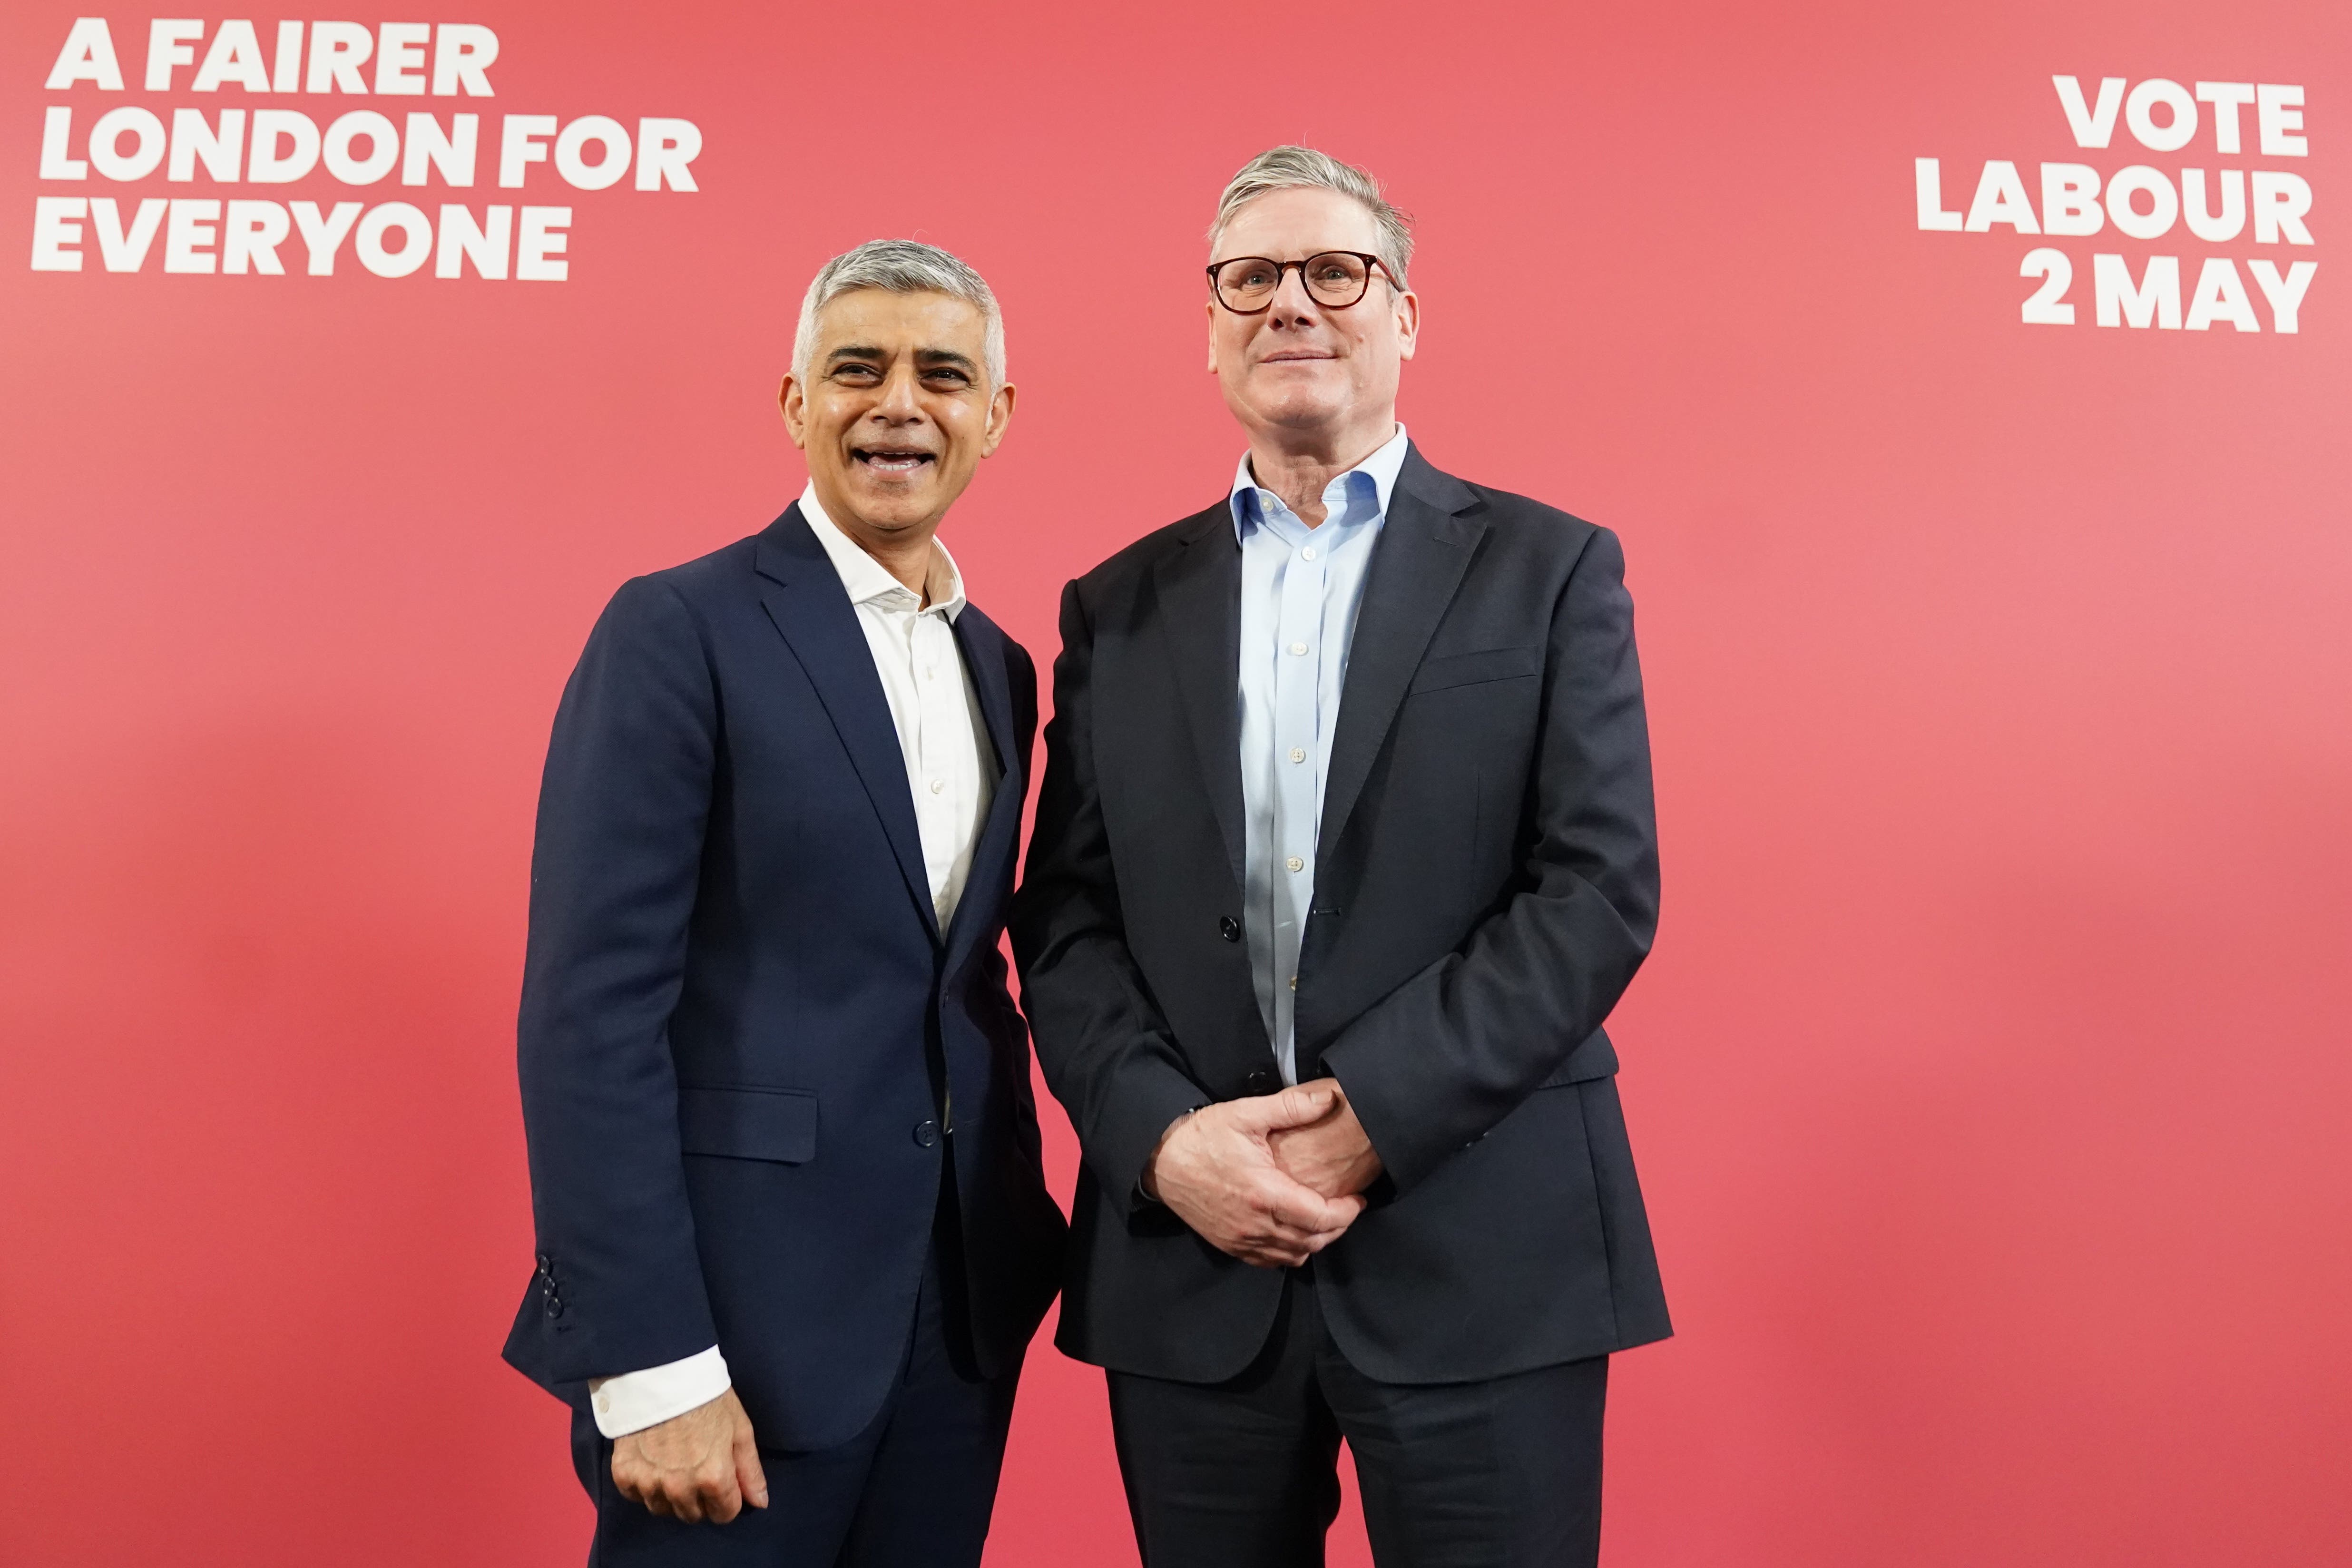 Mayor of London Sadiq Khan appeared alongside Labour Party leader Sir Keir Starmer